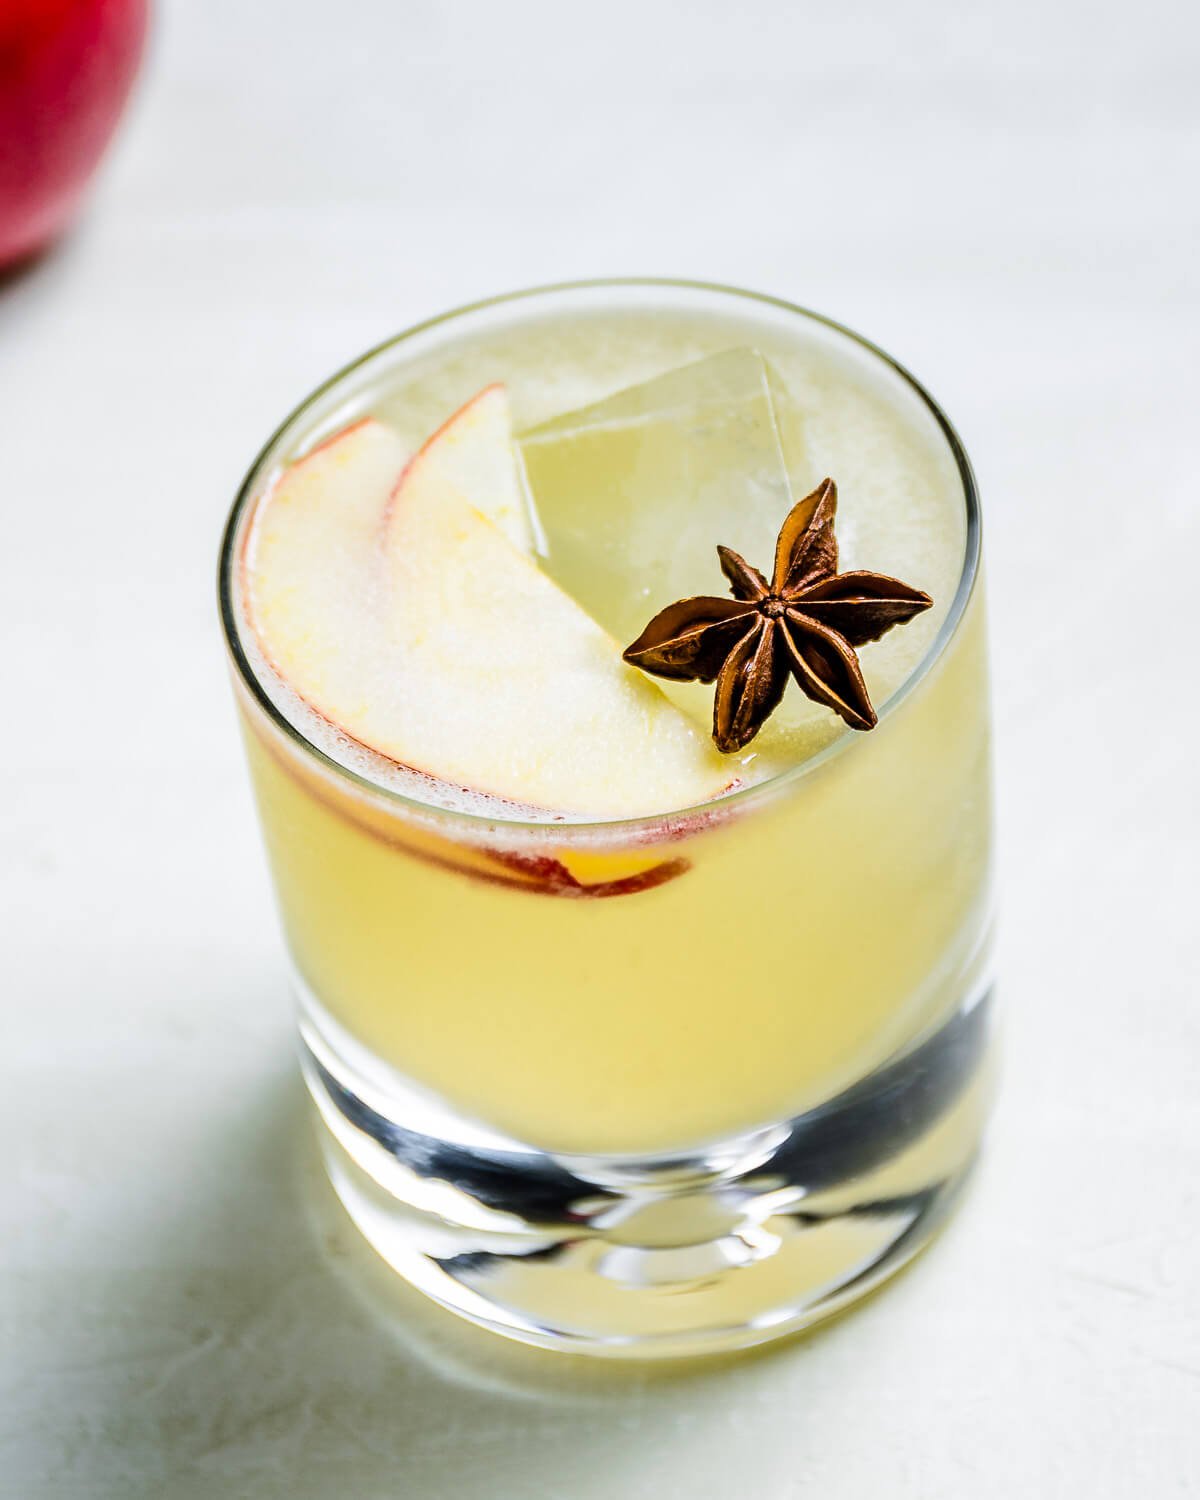 Apple margarita in glass with star anise garnish.